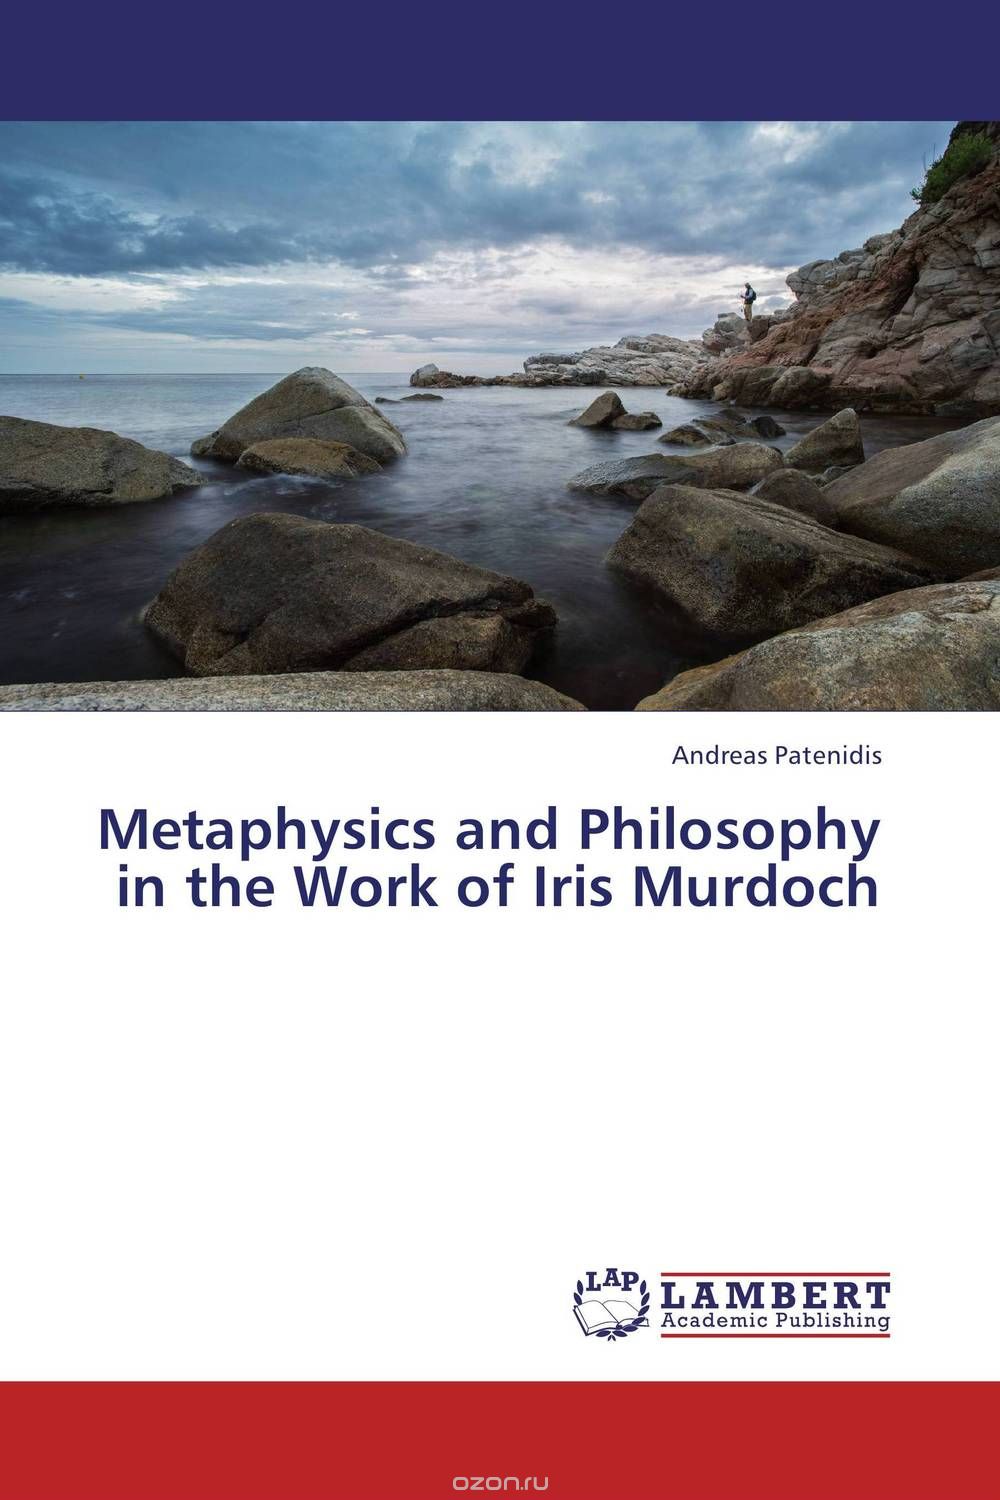 Скачать книгу "Metaphysics and Philosophy in the Work of Iris Murdoch"